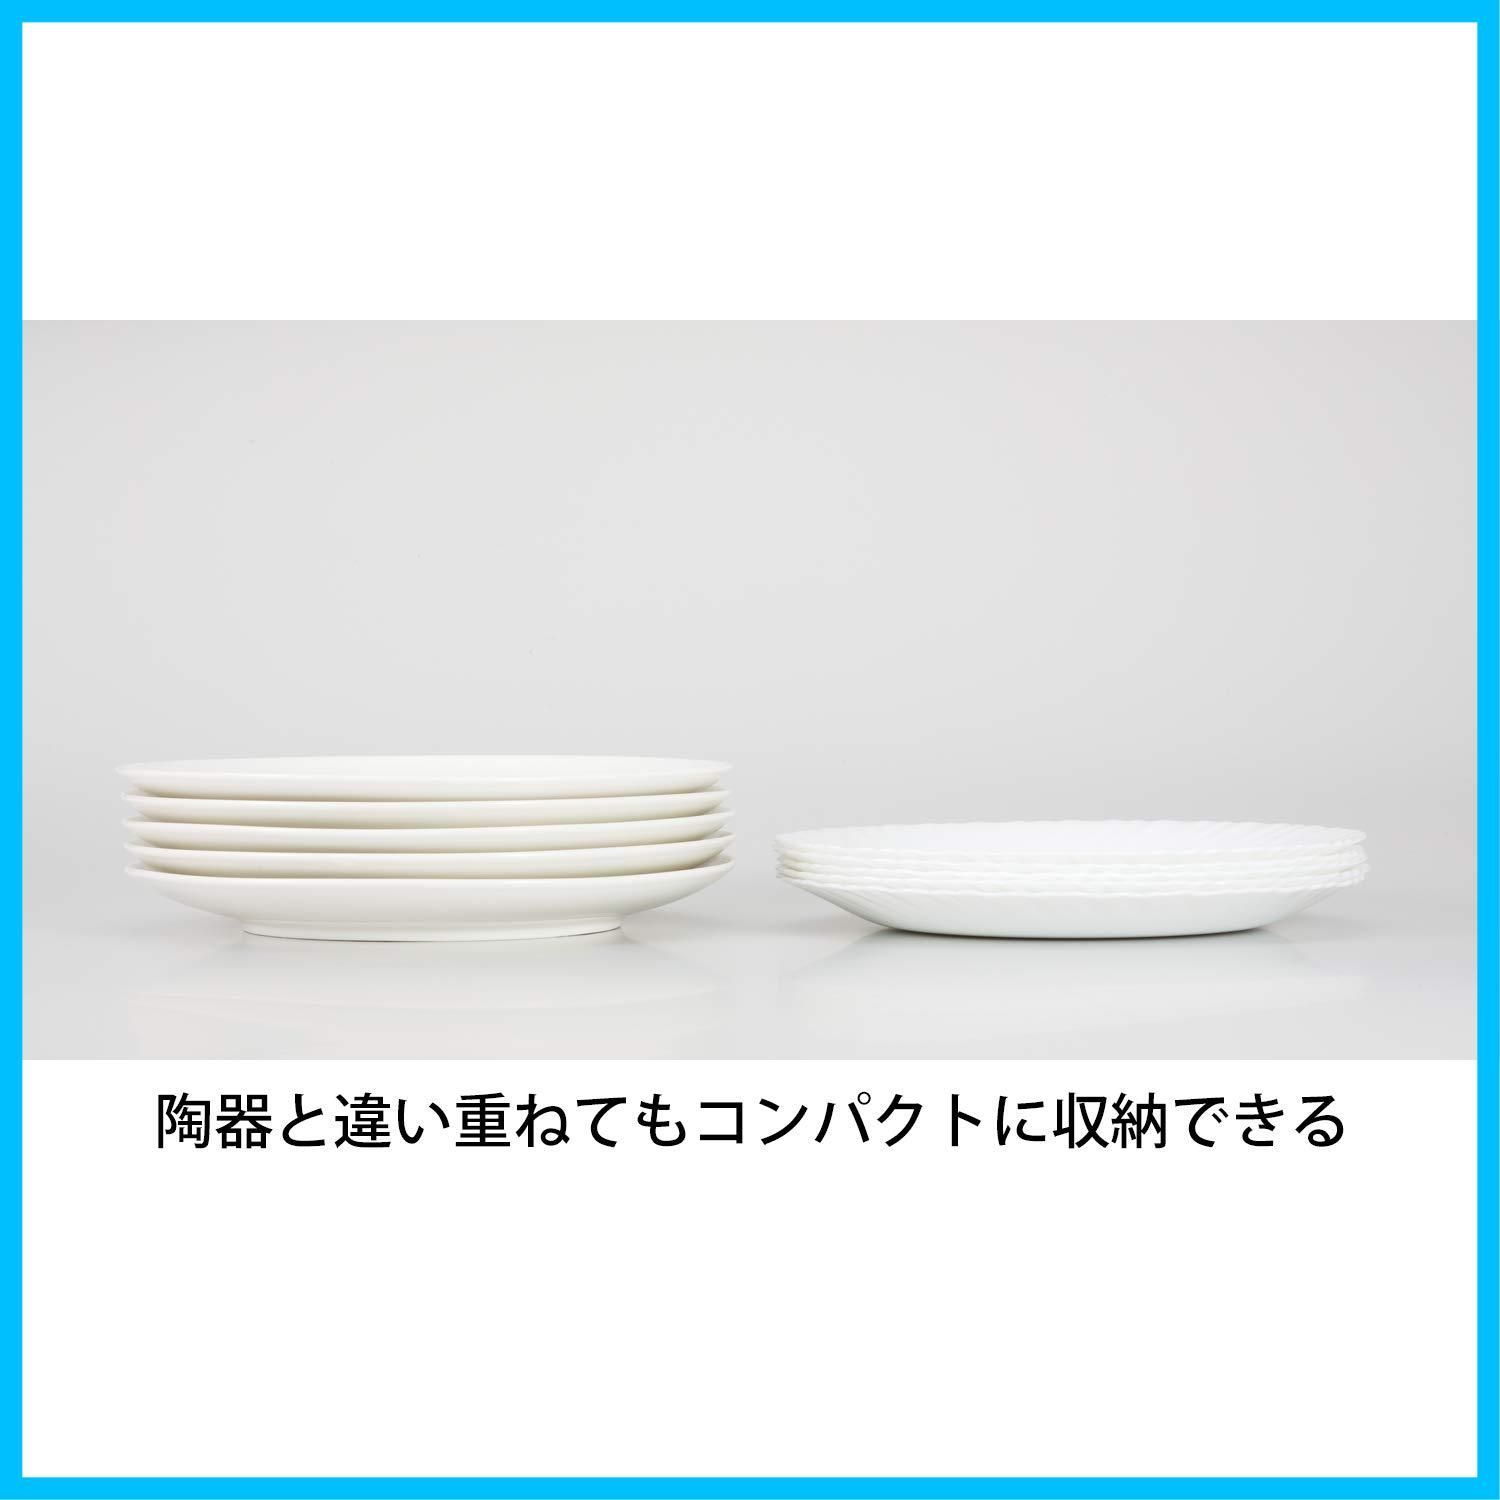 iwaki (イワキ) 耐熱ガラス 食器 耐熱皿 ファミエット シルクホワイト 深皿 18cm ×5点セット 電子レンジ、食洗器対応